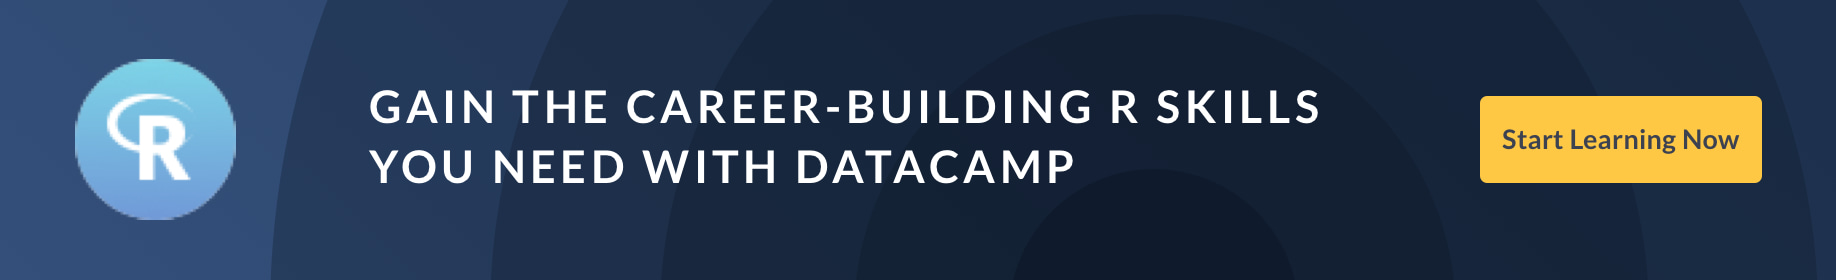 career building r skills with datacamp banner